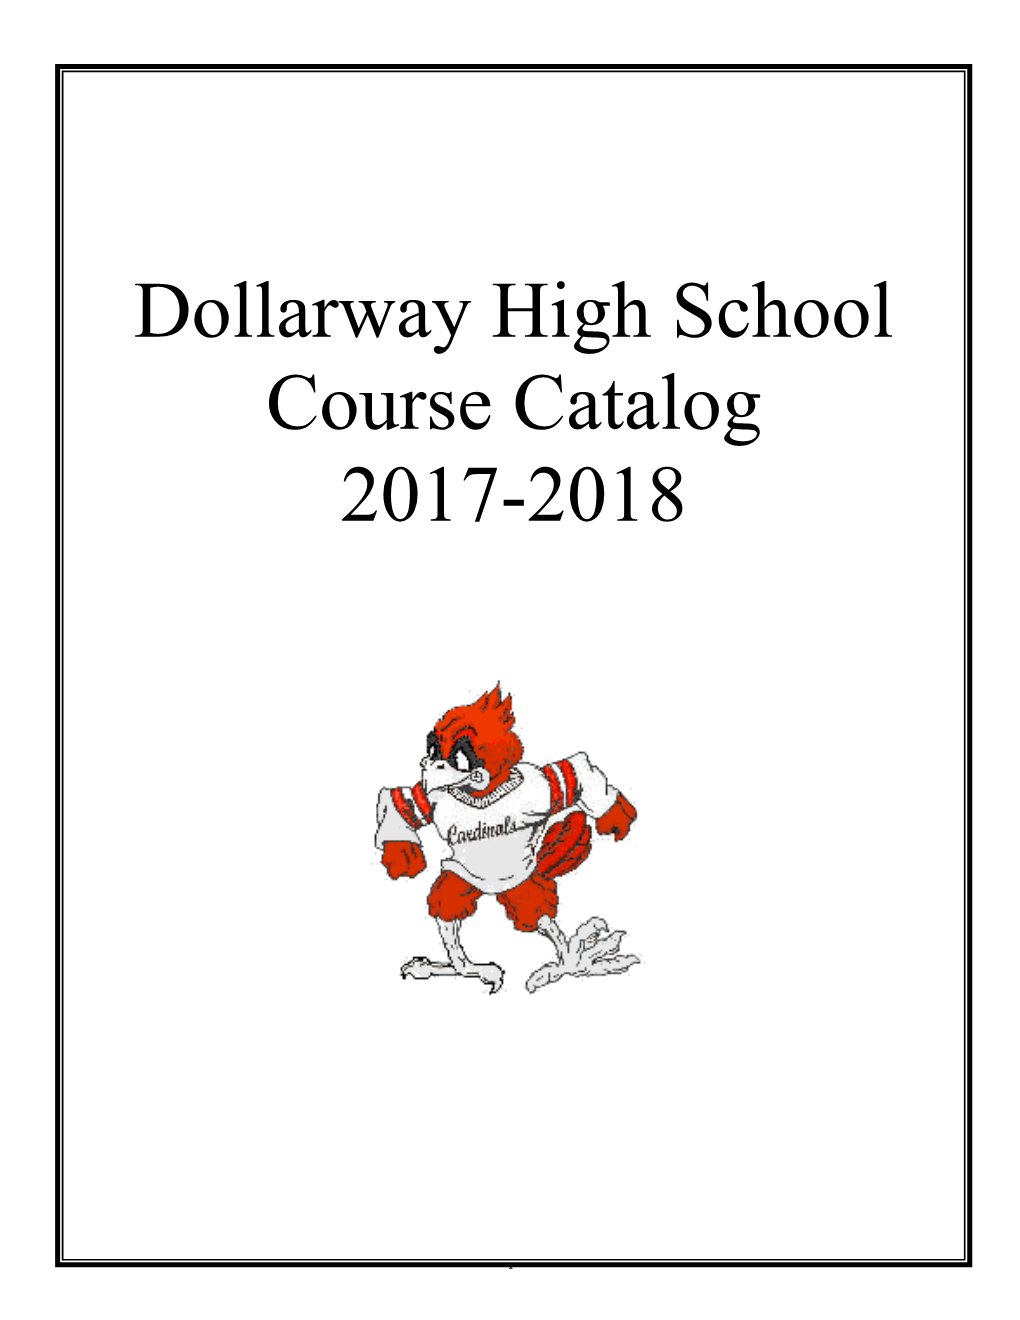 Dollarway High School Course Catalog 2017-2018